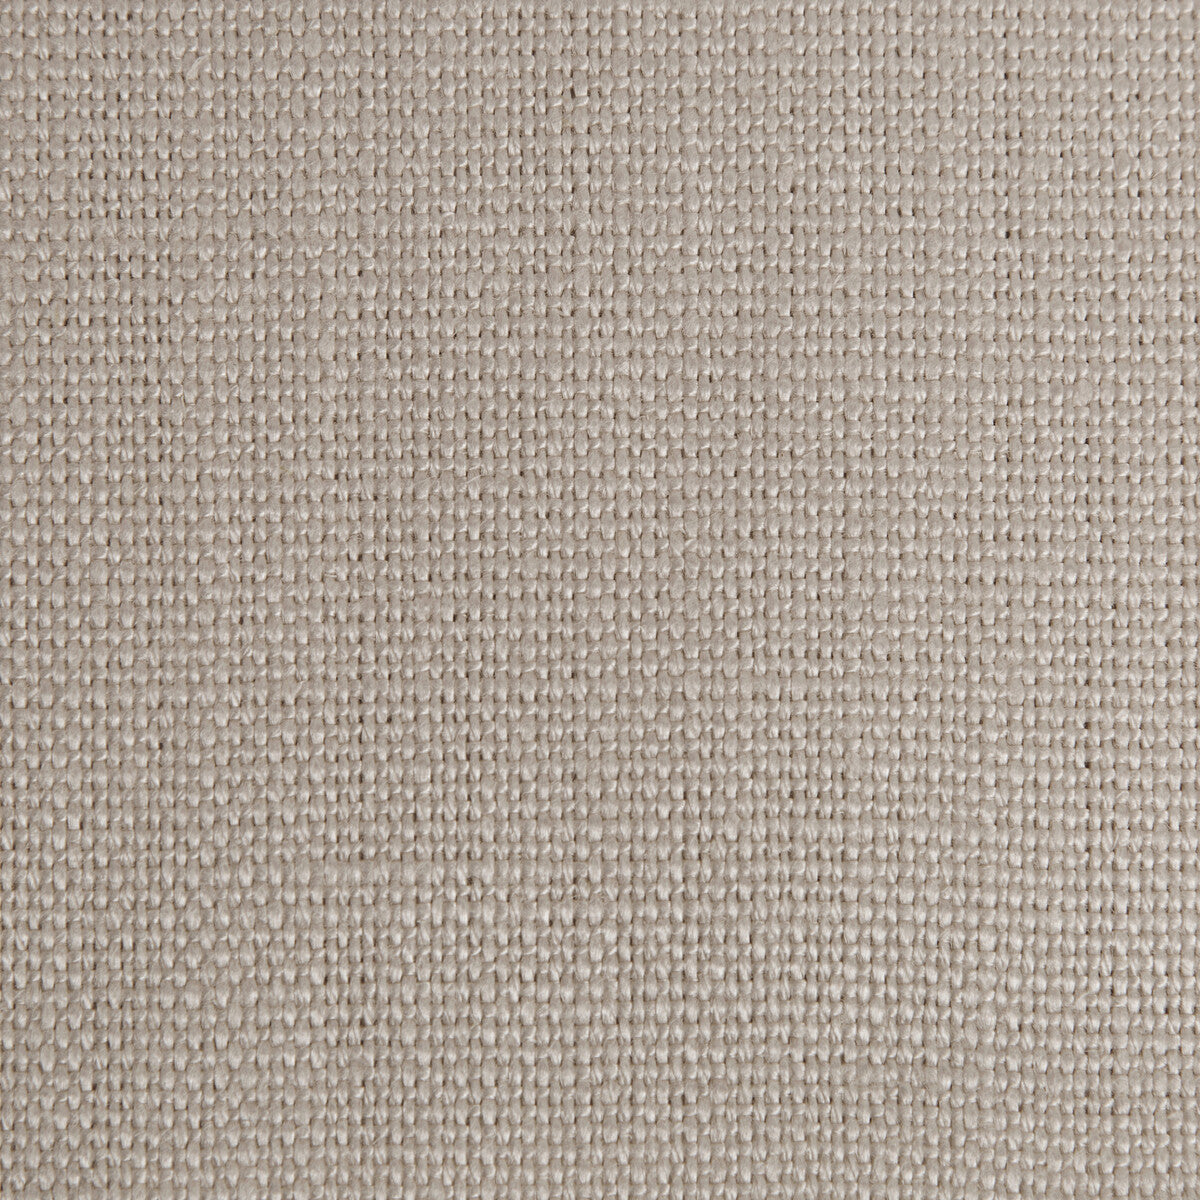 Stone Harbor fabric in blush color - pattern 27591.117.0 - by Kravet Basics